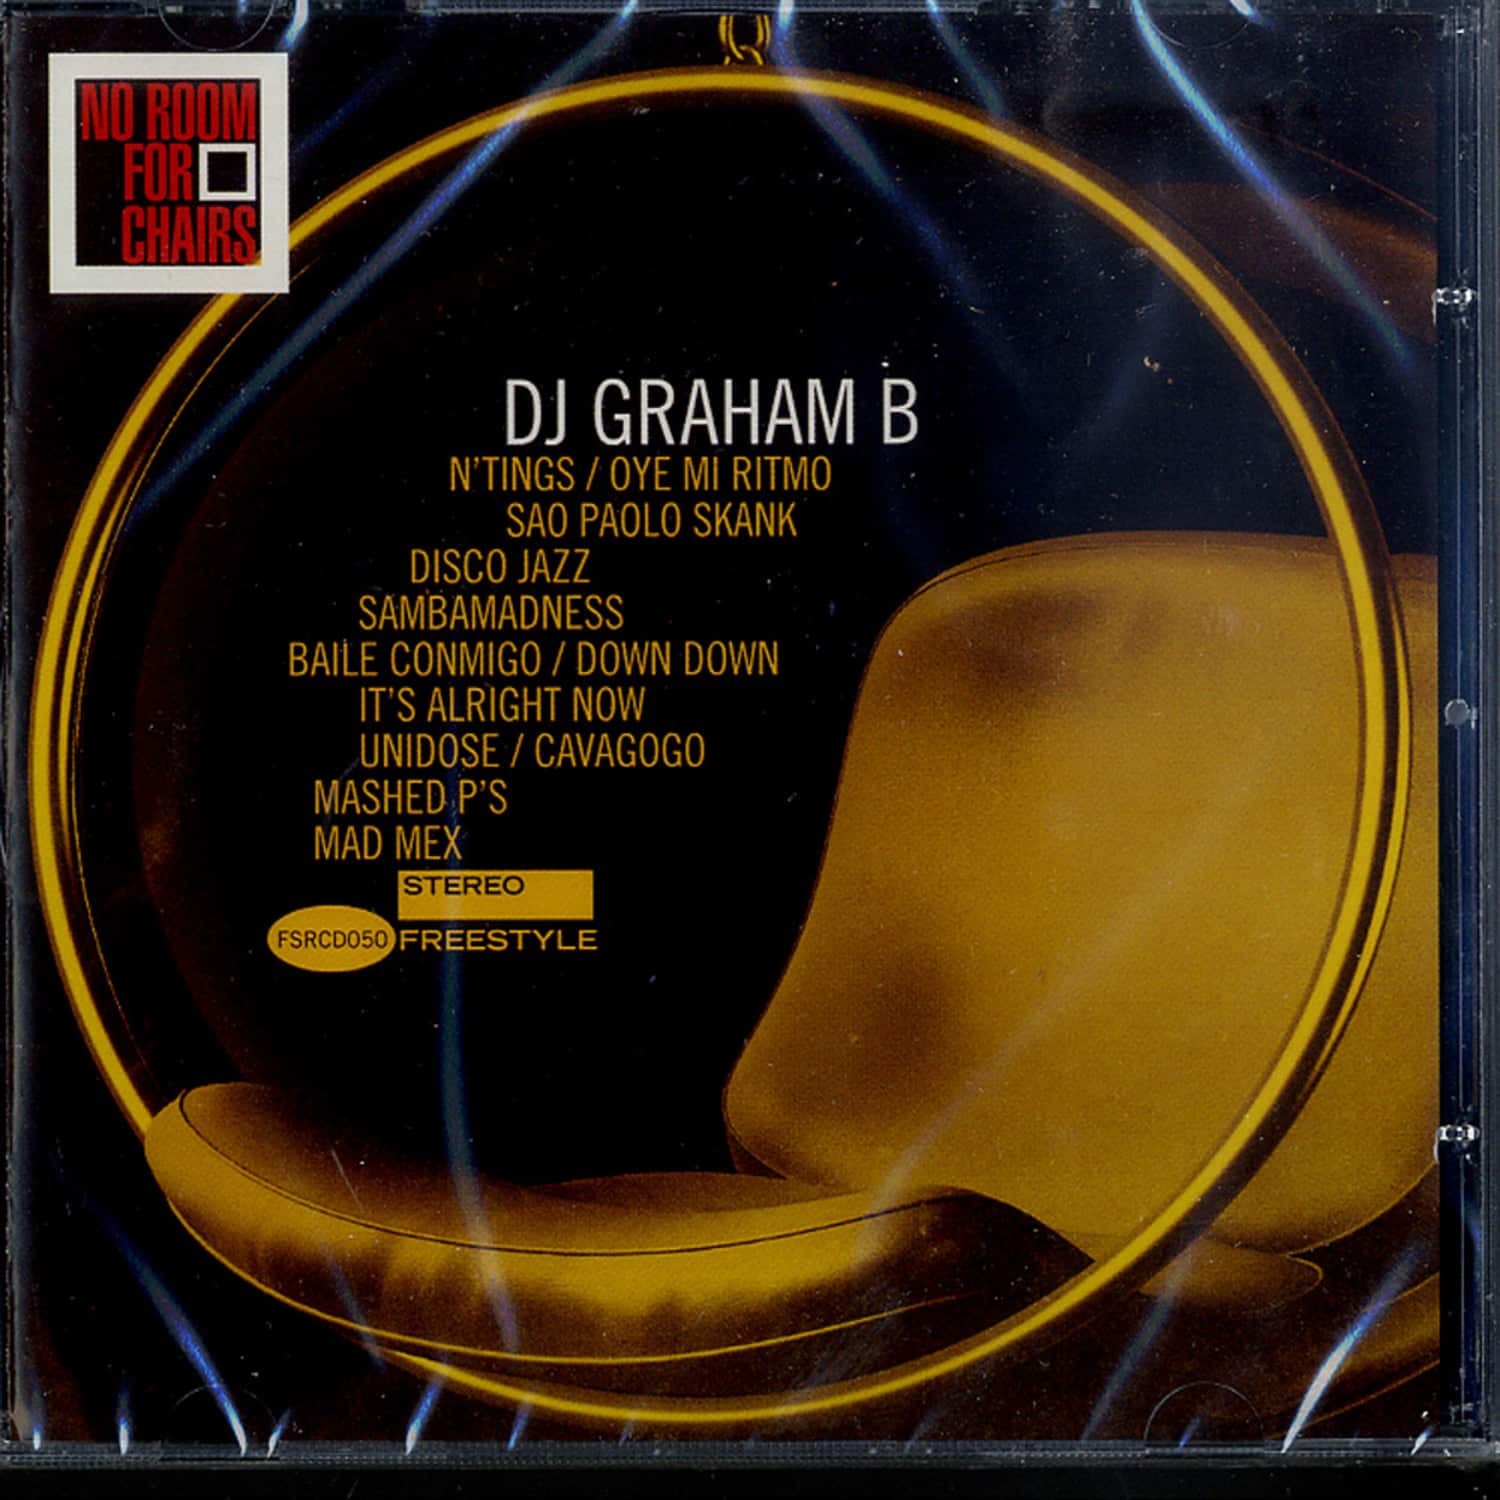 DJ Graham B - NO ROOM FOR CHAIRS 